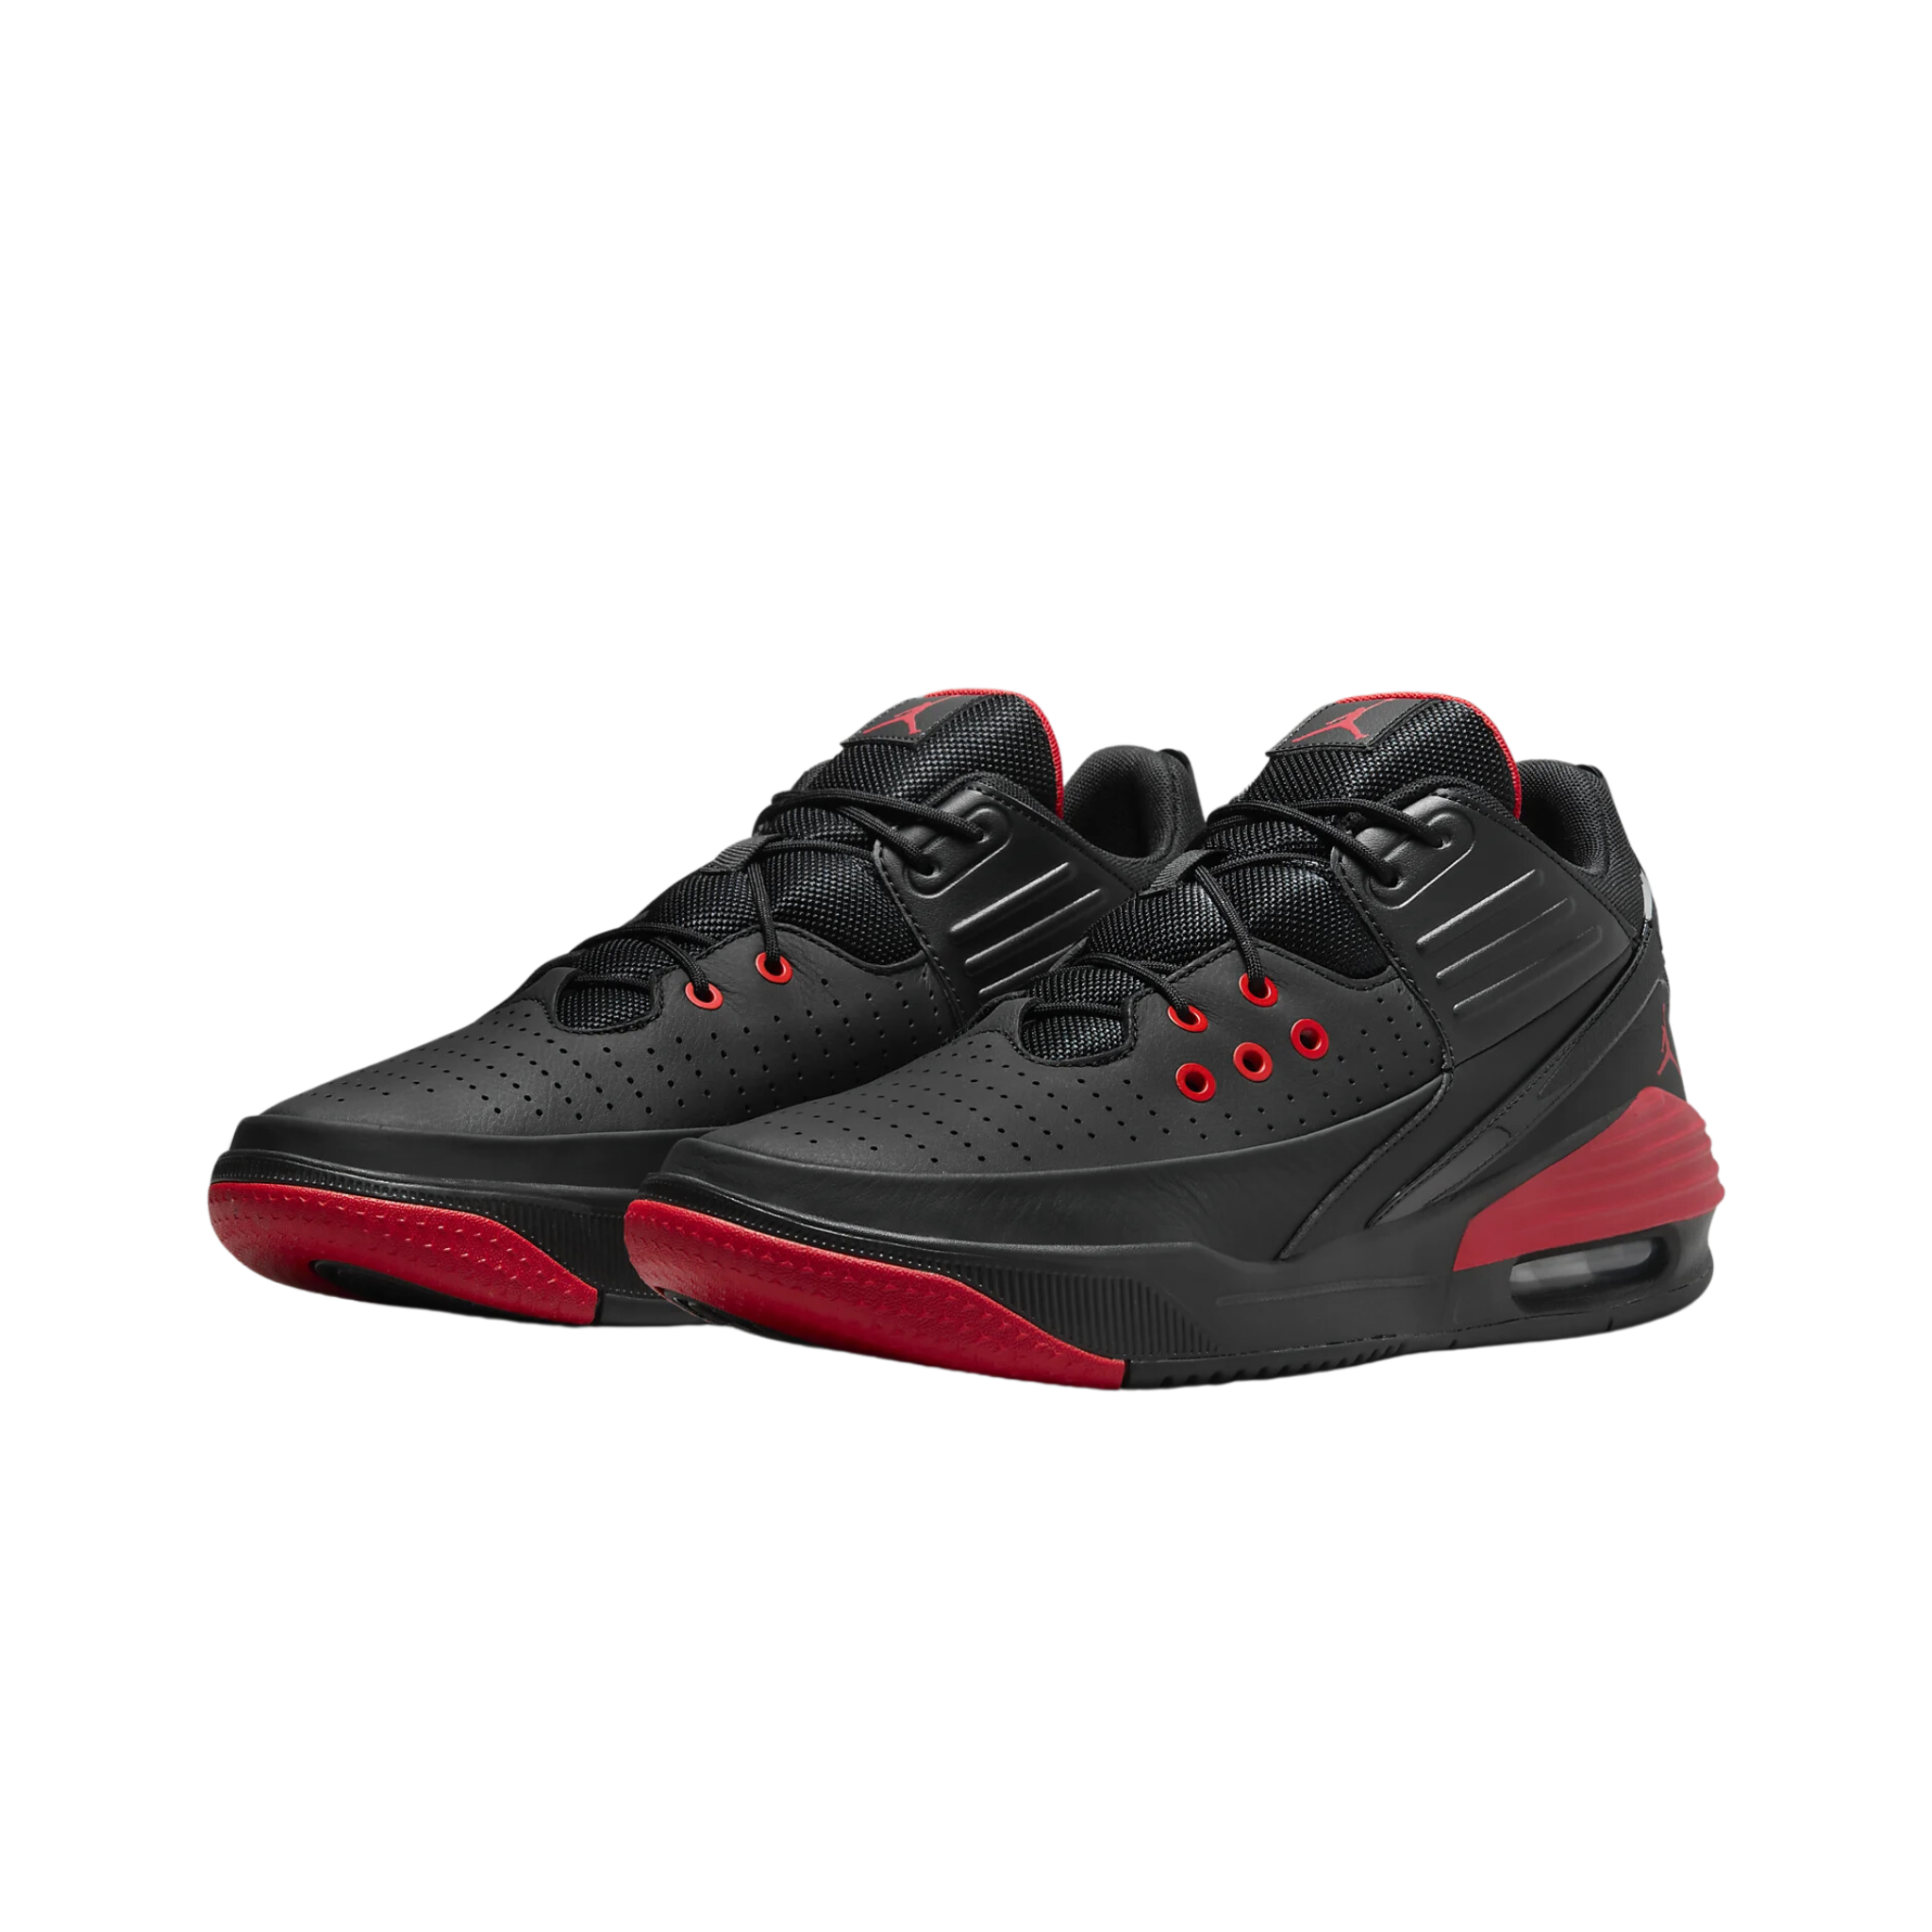 Jordan Max Aura 5 Men's Shoes (Black/Black/University Red)